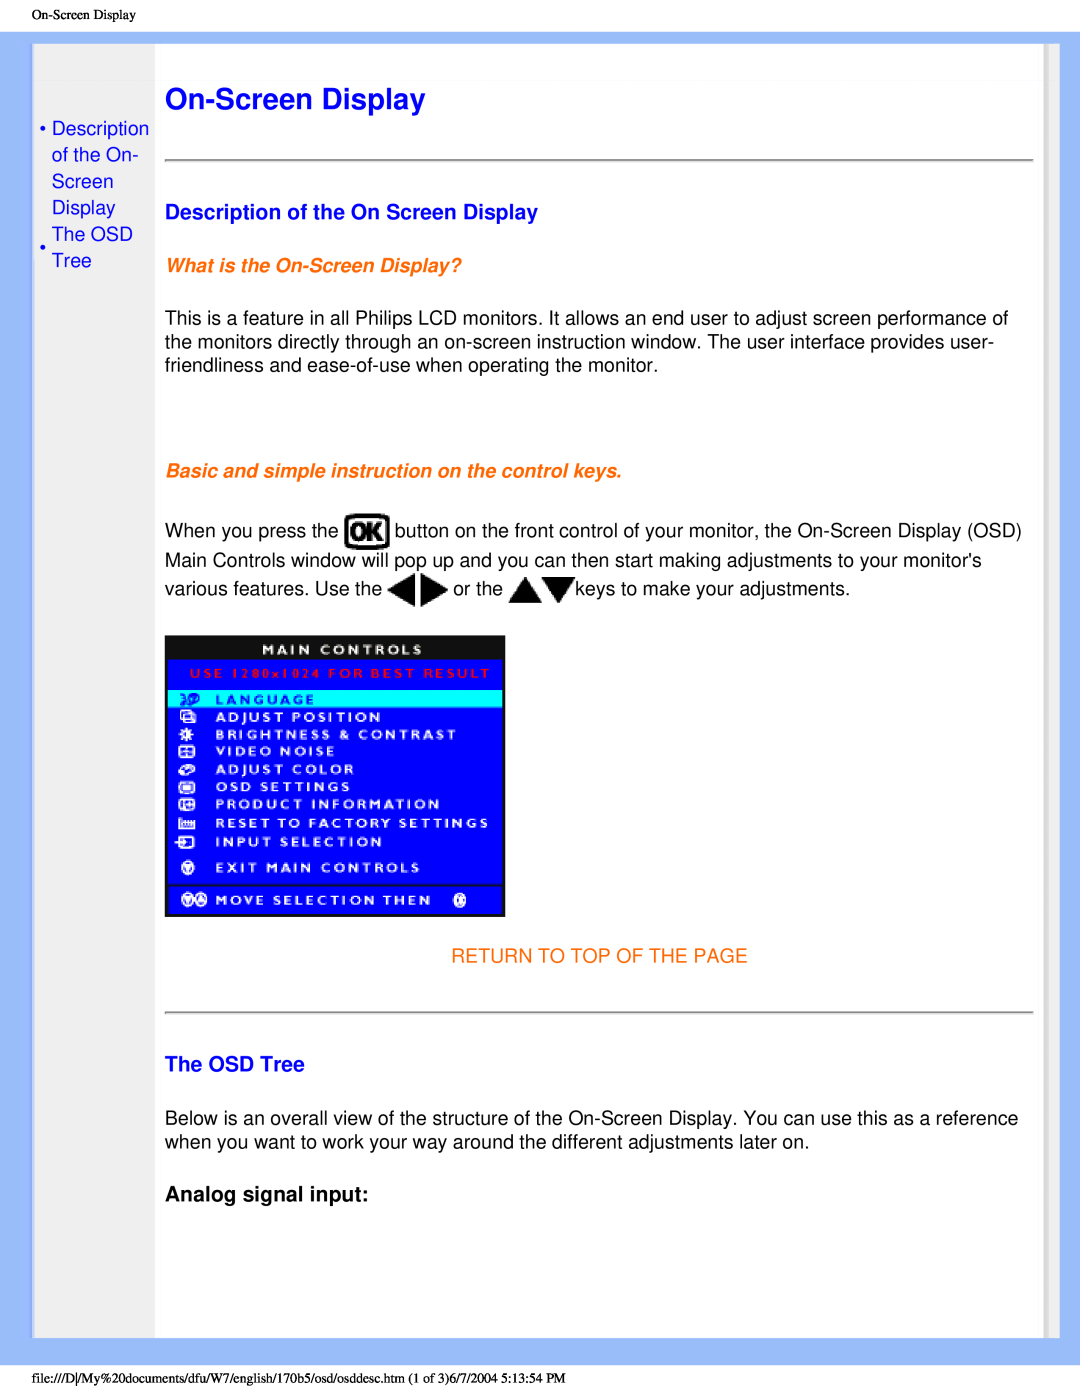 Philips 170B5 user manual On-ScreenDisplay, Description of the On Screen Display, The OSD Tree, Analog signal input 